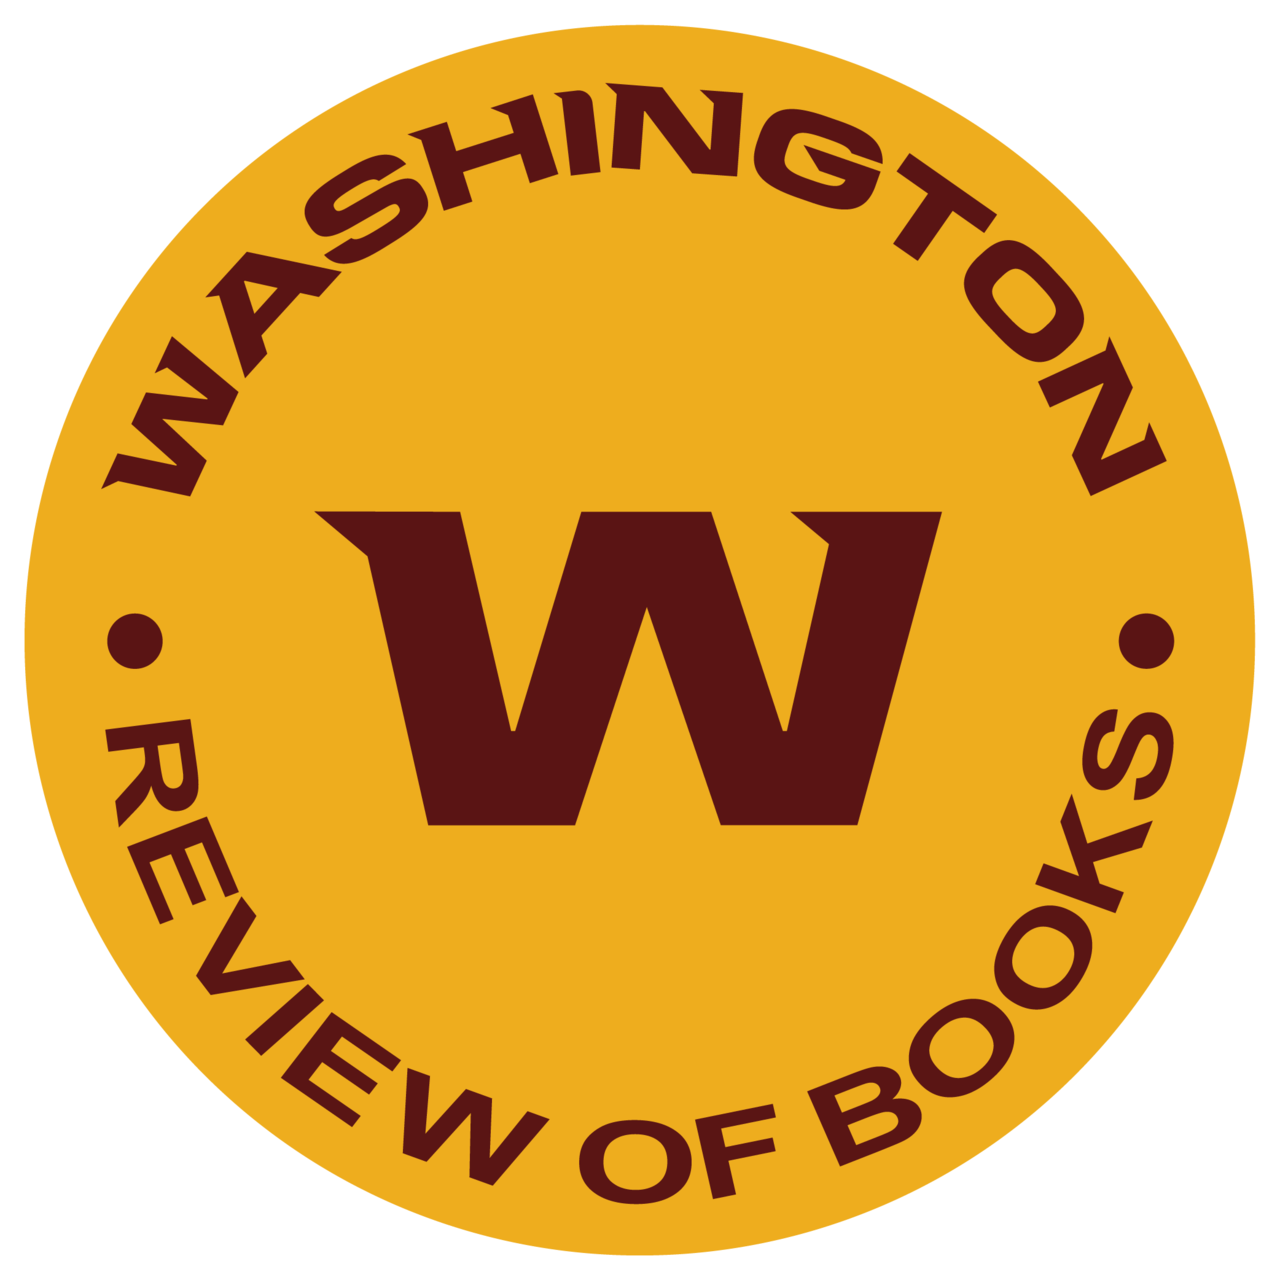 Artwork for Washington Review of Books